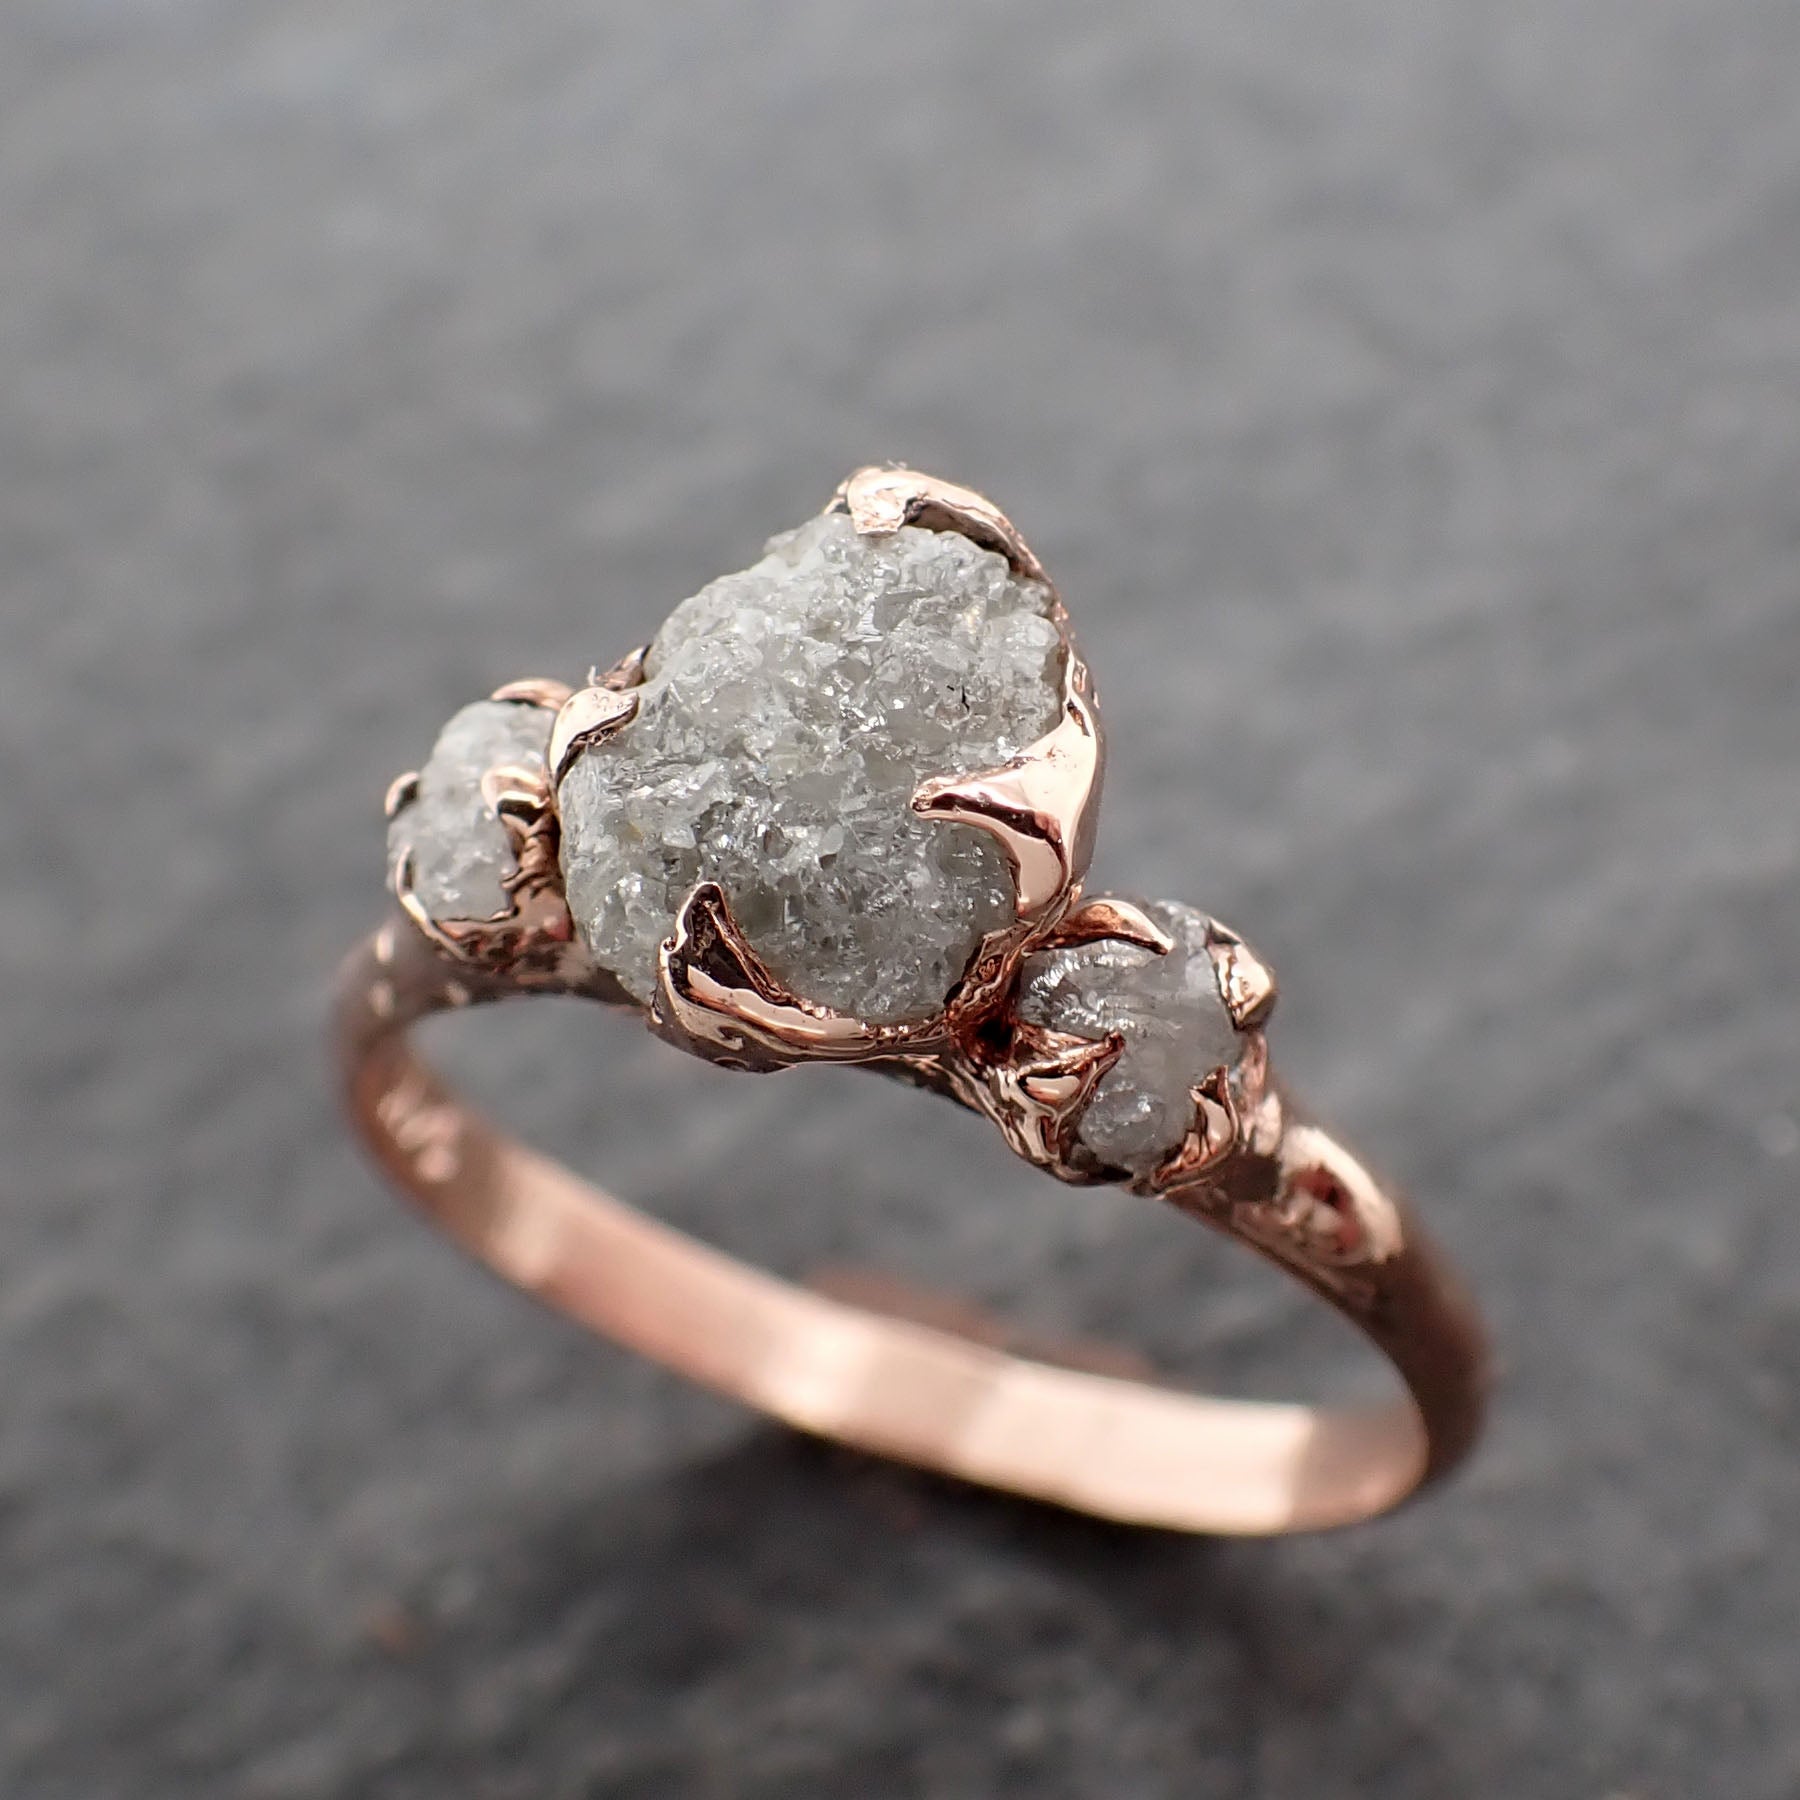 raw rough diamond engagement stacking multi stone wedding anniversary 14k rose gold ring rustic 2552 Alternative Engagement